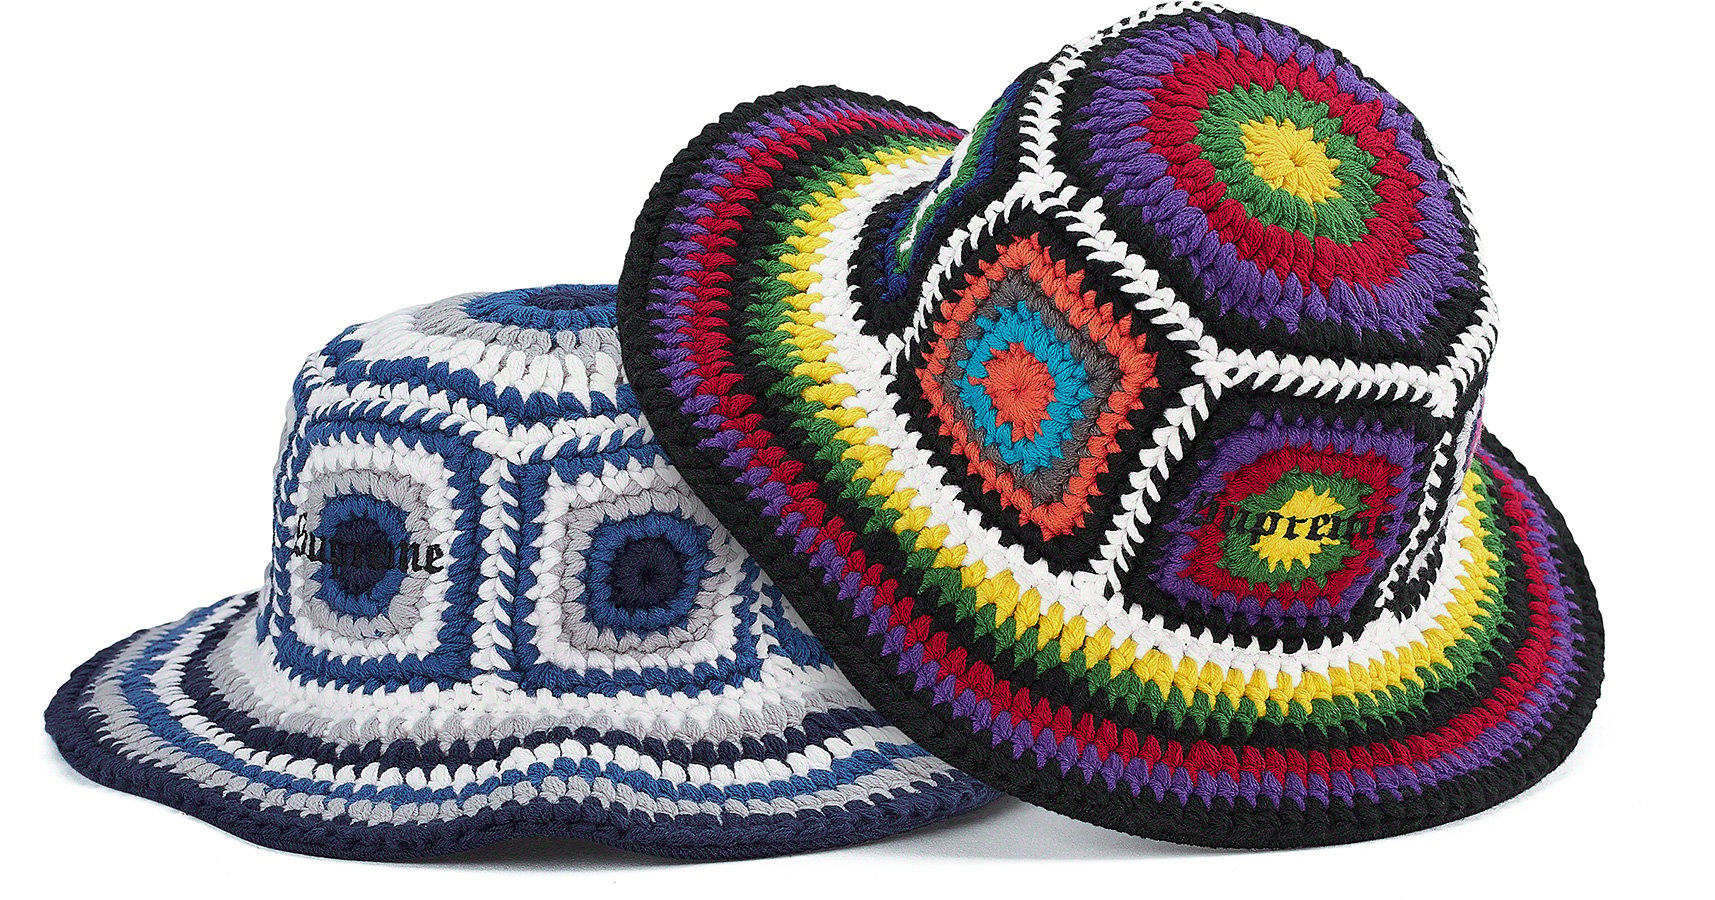 Crochet Crusher - fall winter 2020 - Supreme